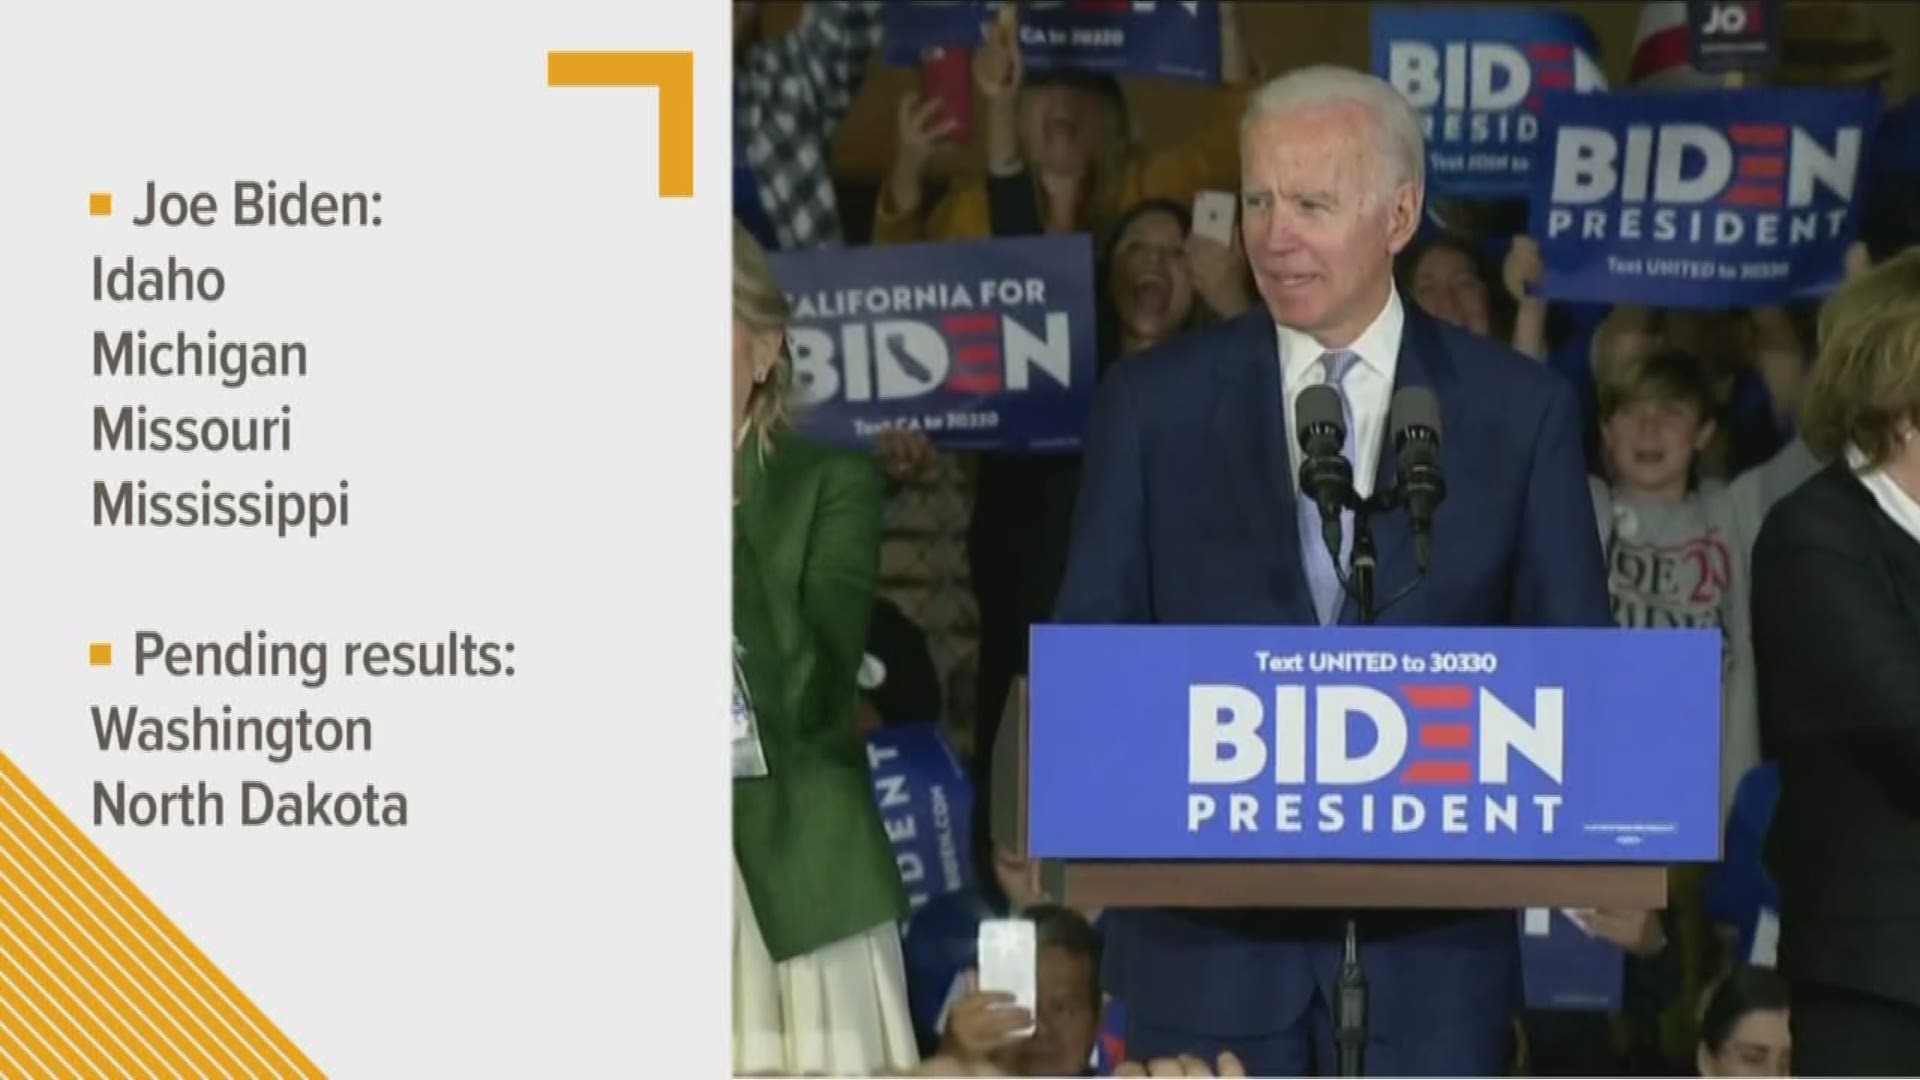 Biden wins Idaho Democratic presidential primary